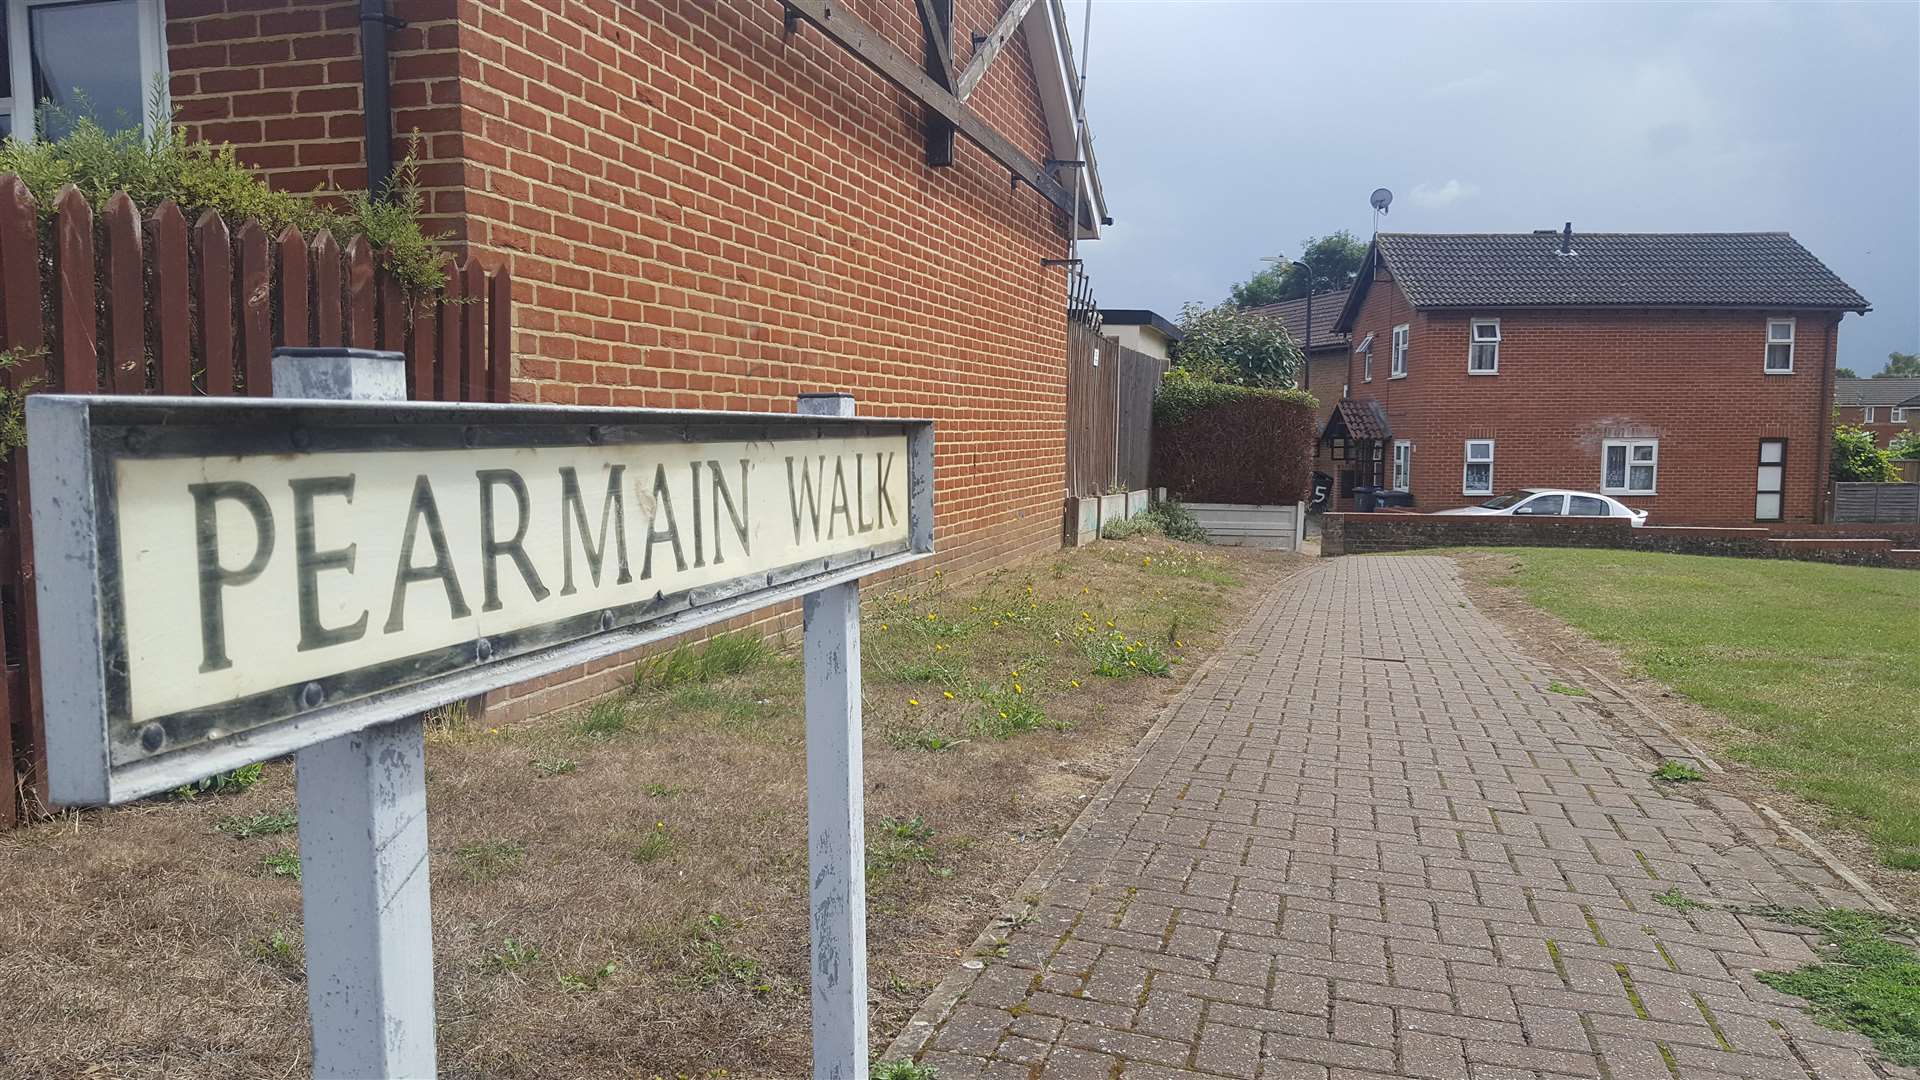 The armed raid happened in Pearmain Walk, Canterbury